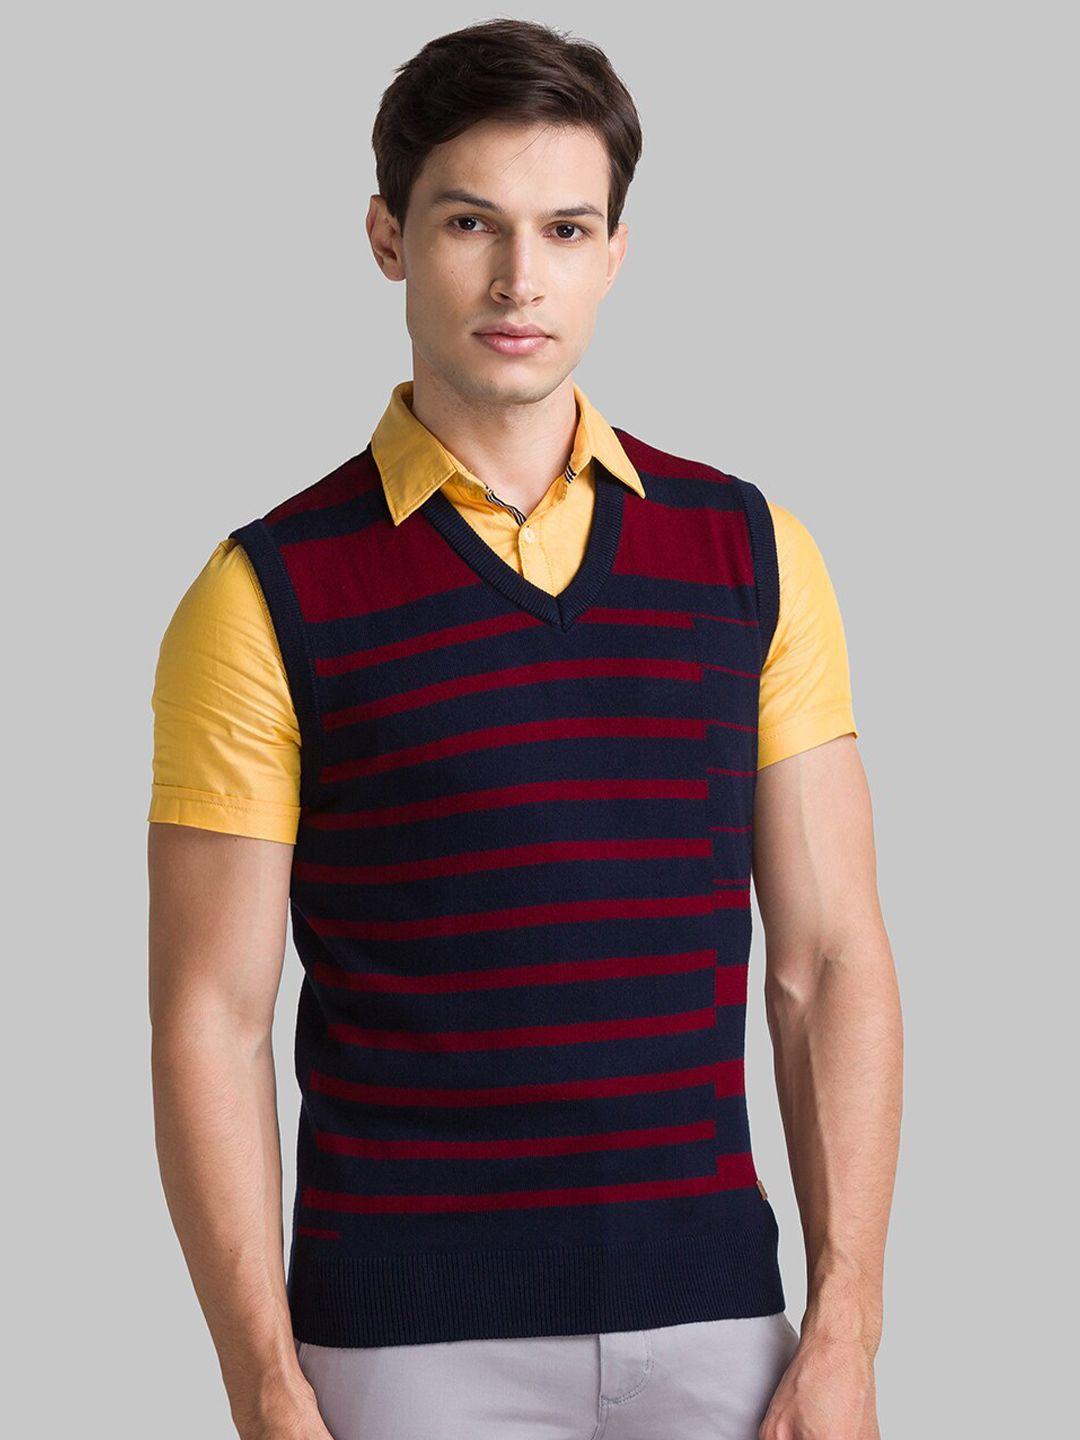 parx-men-blue-&-maroon-striped-sweater-vest